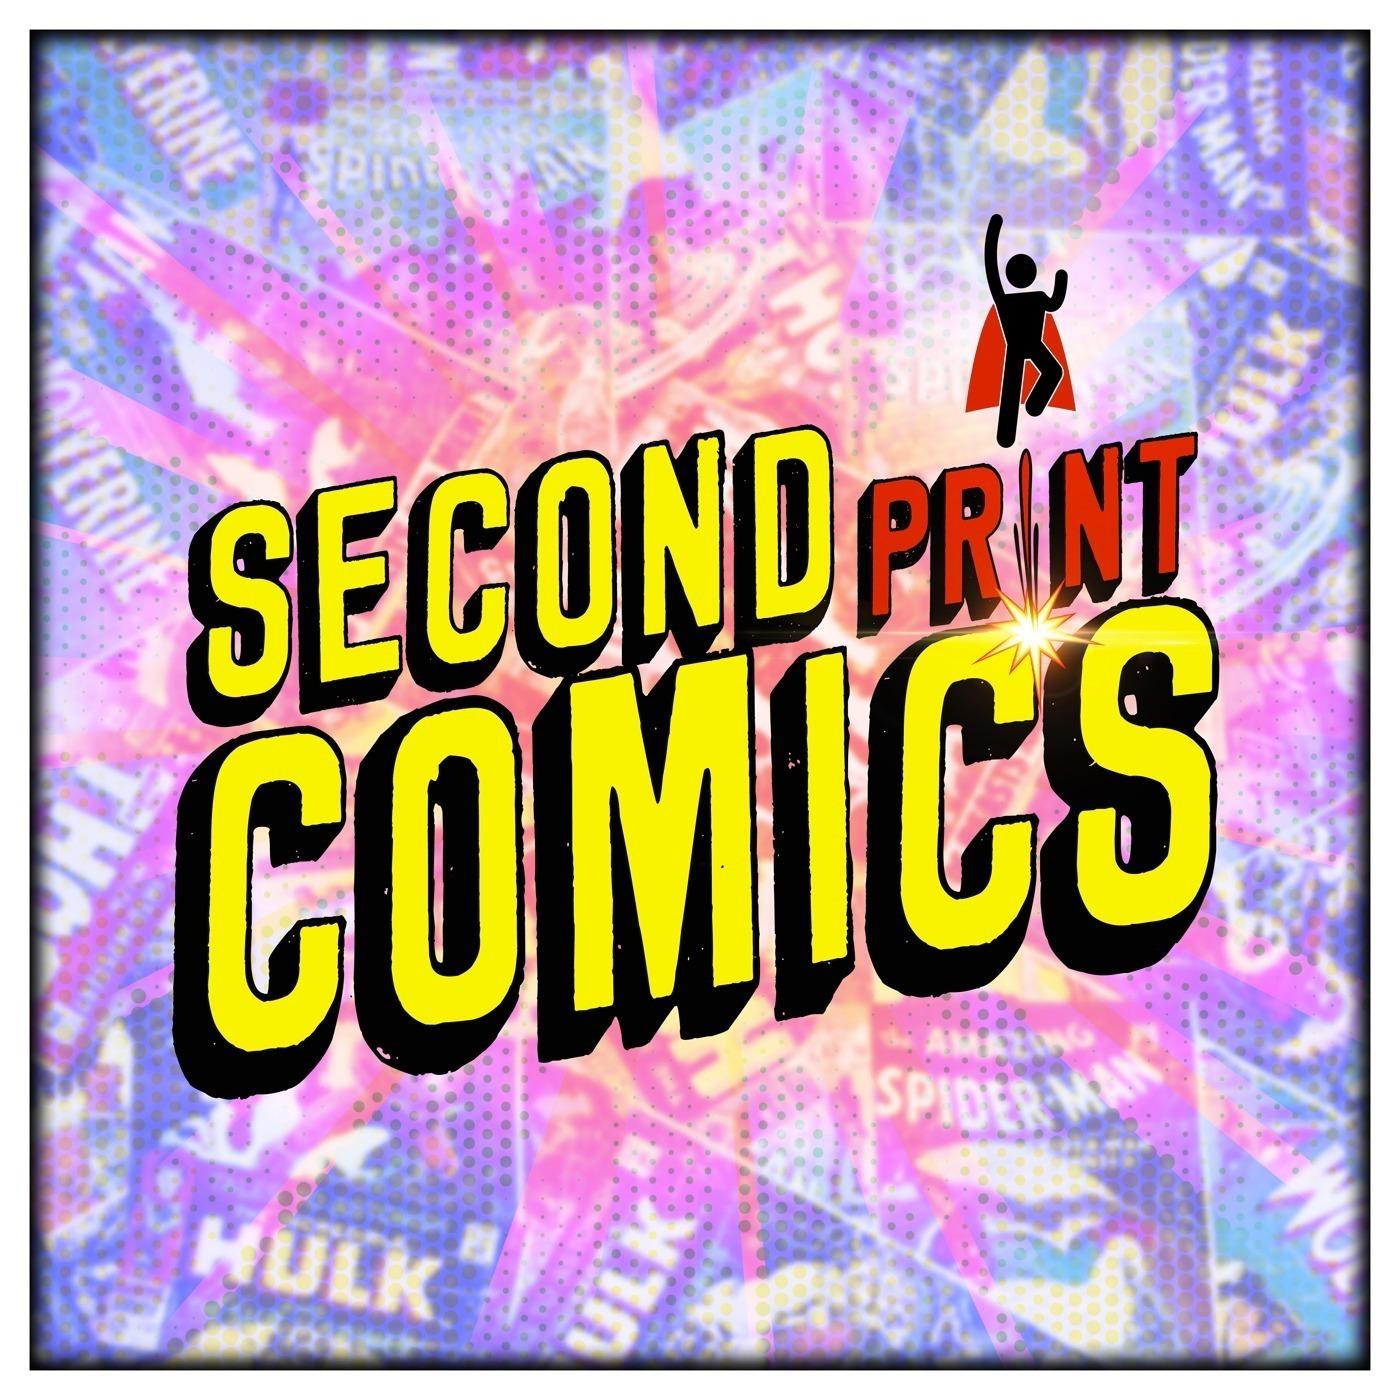 Second Print Comics Podcast